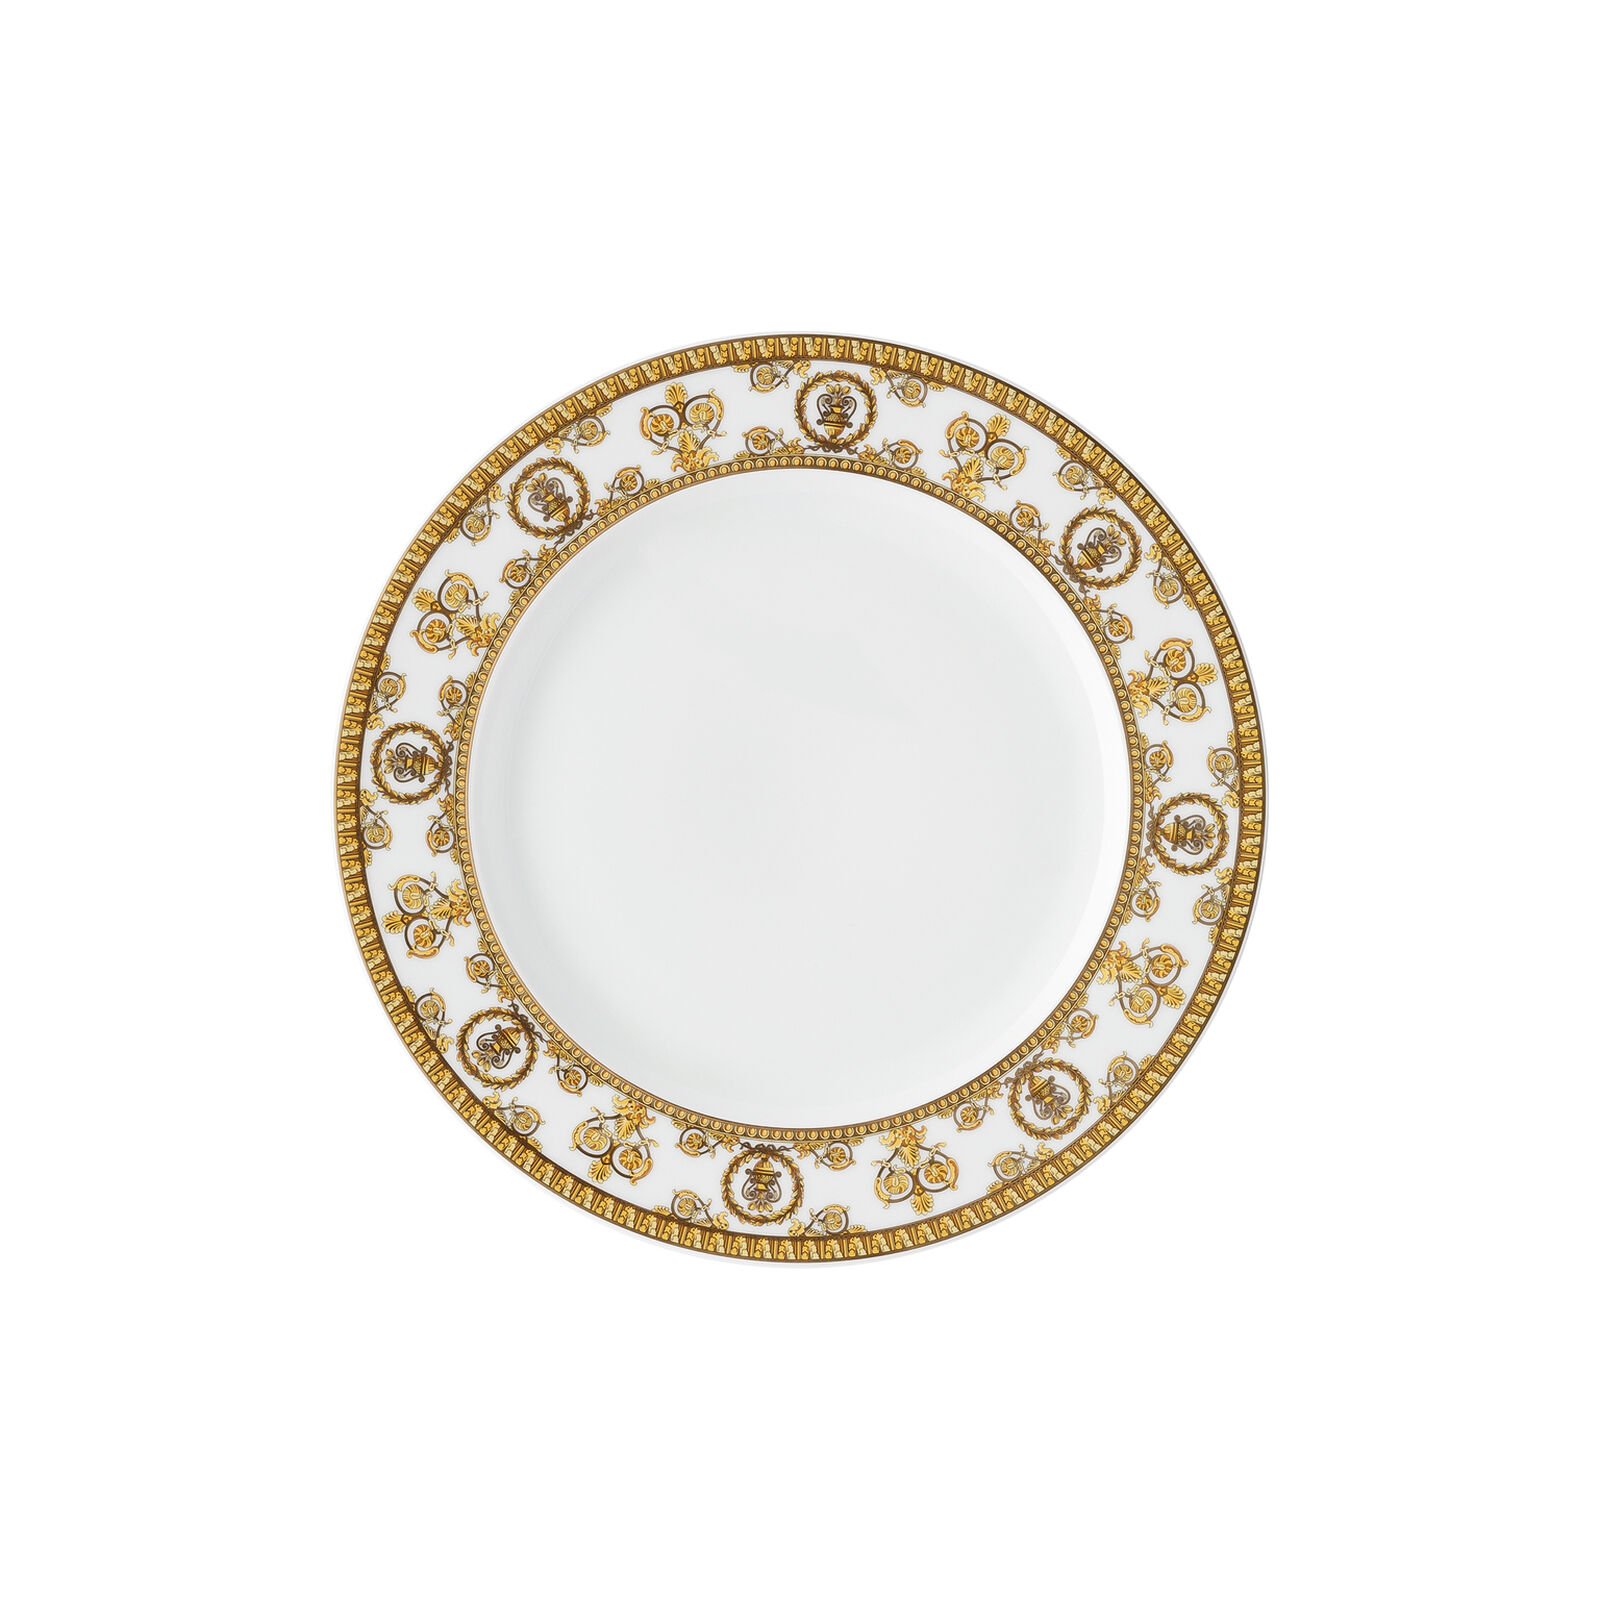 Versace Rosenthal I love Baroque Baroque Bianco plate